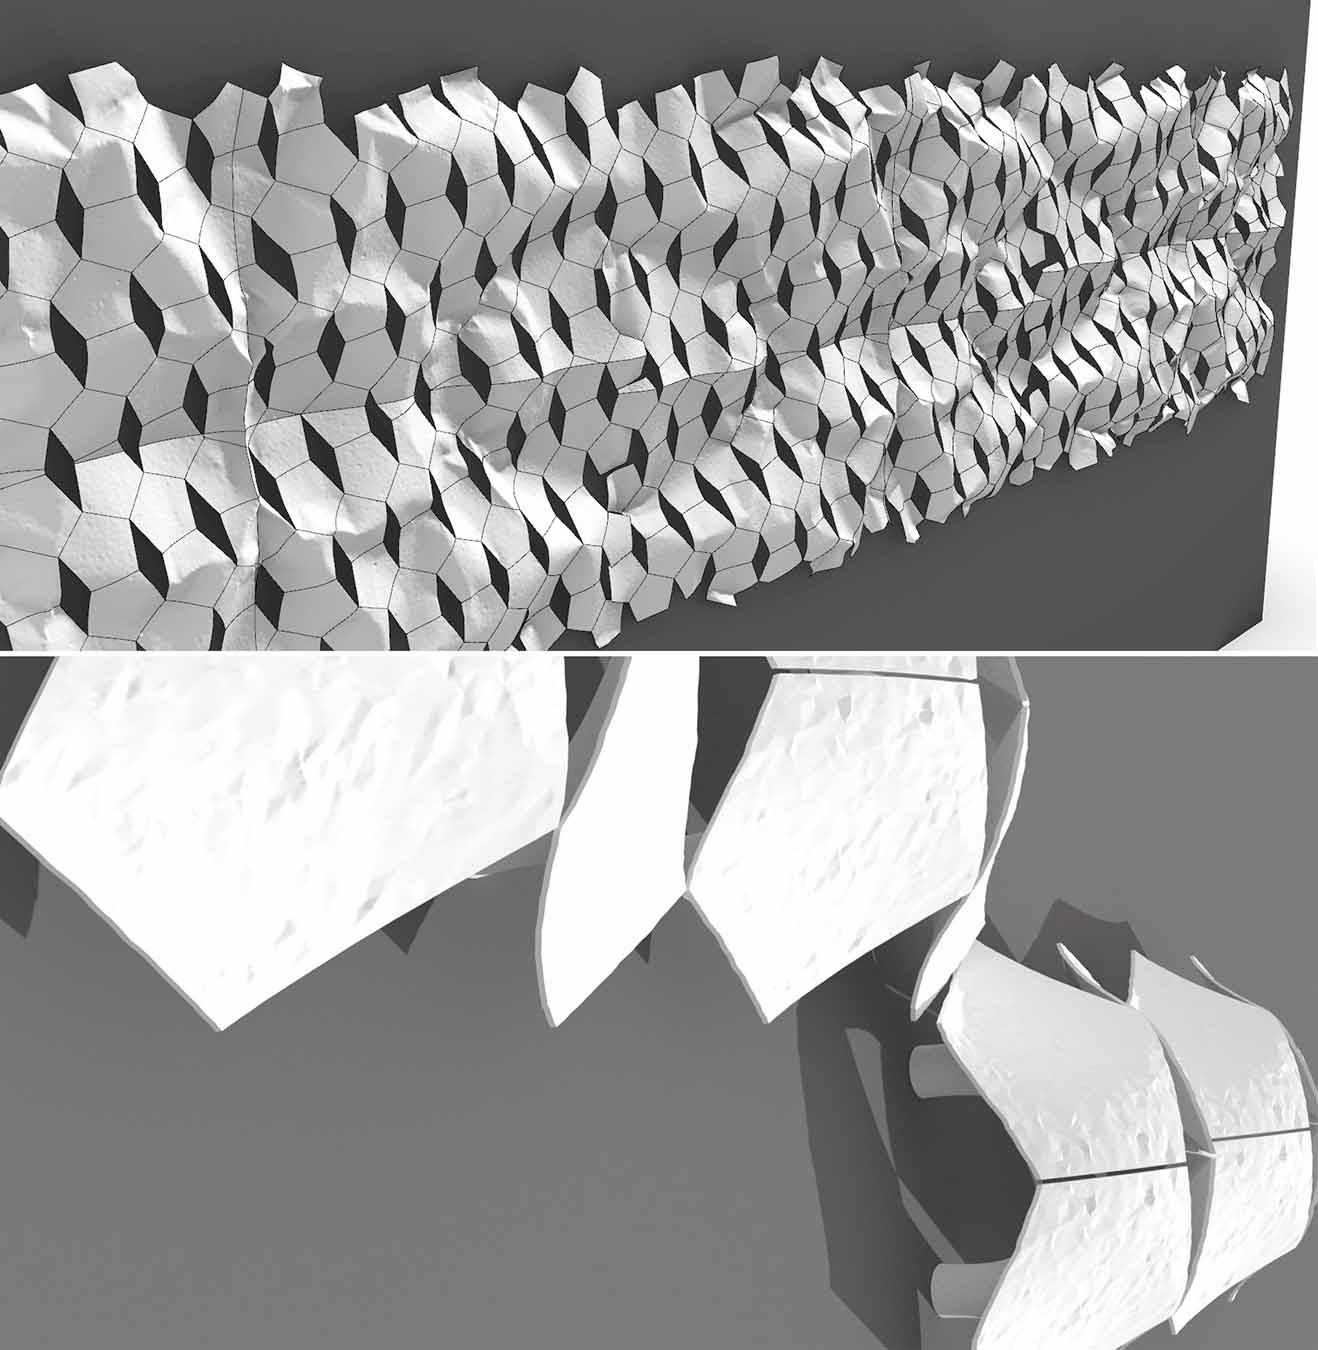 Thomas Schmidt, Modular Tile Study, Digital Rendering, 2022